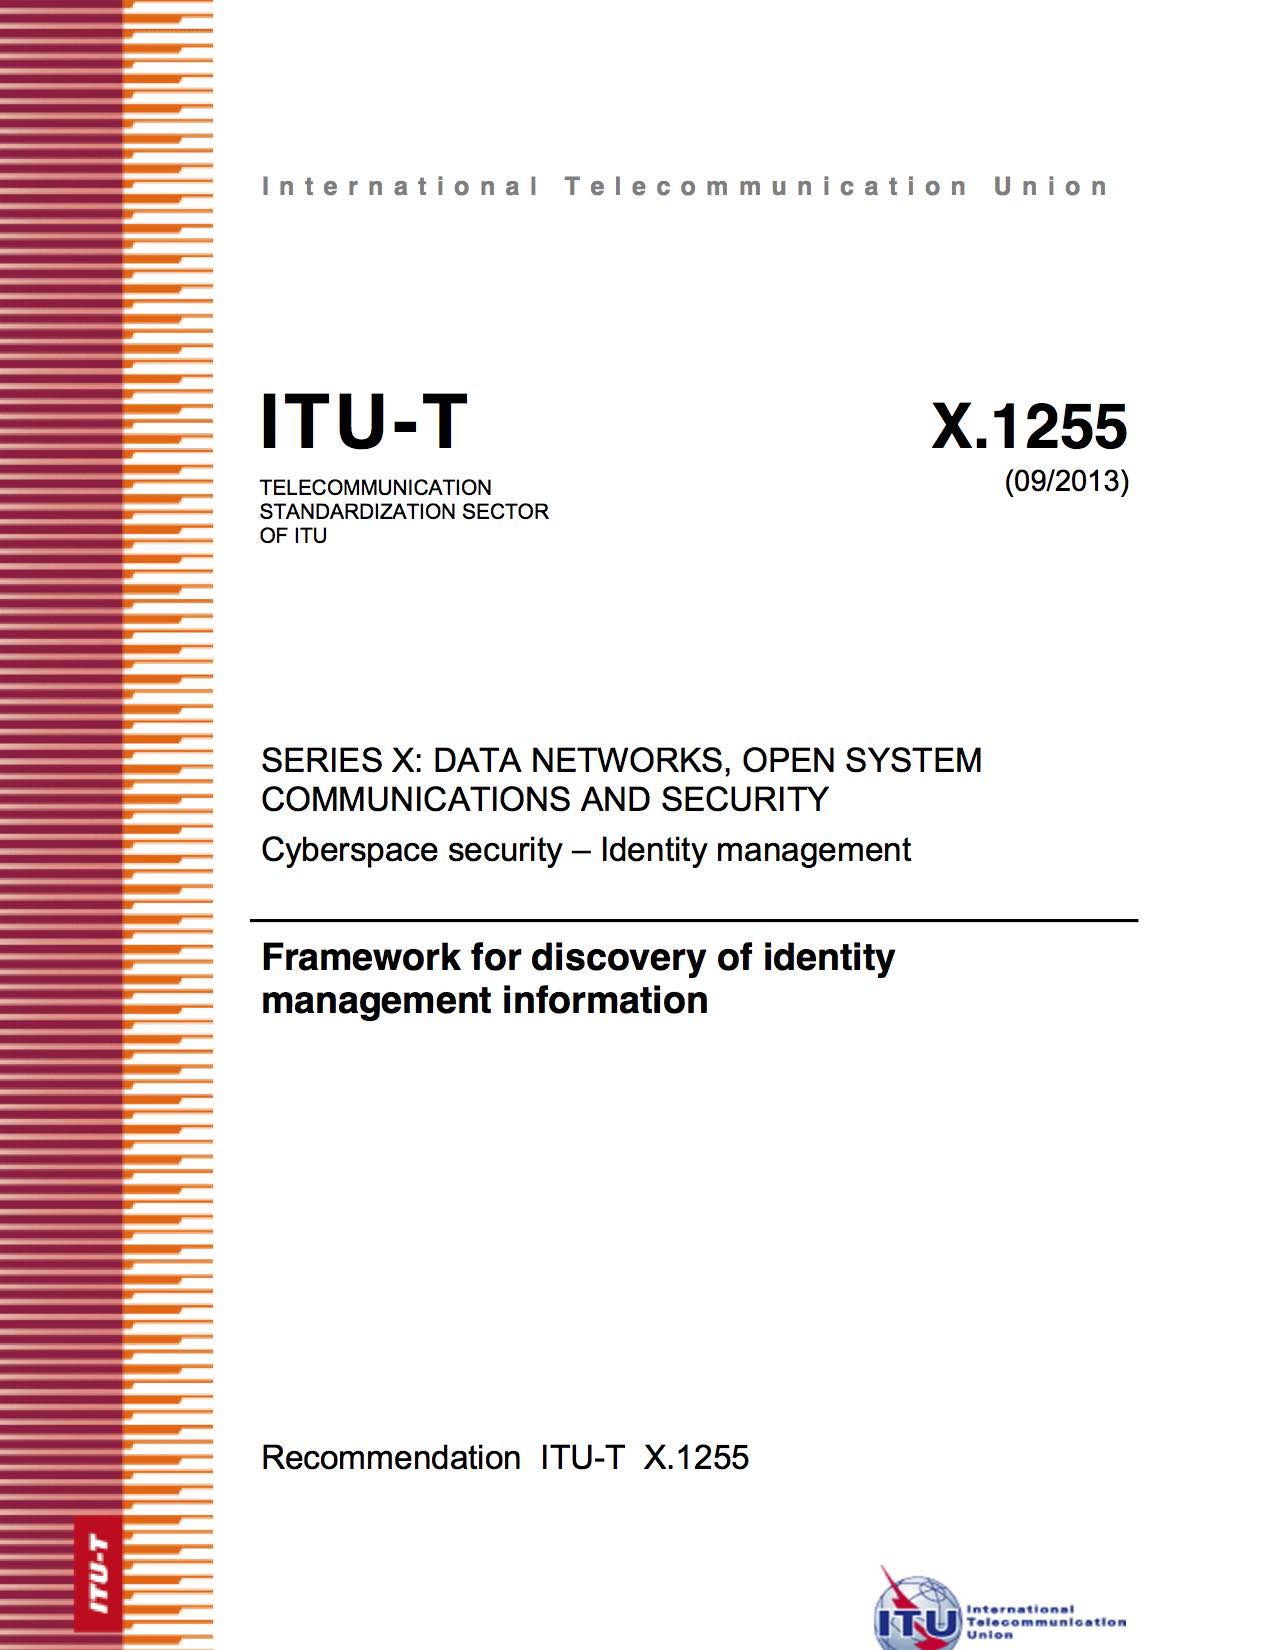  ITU-T X.1255 Recommendation 